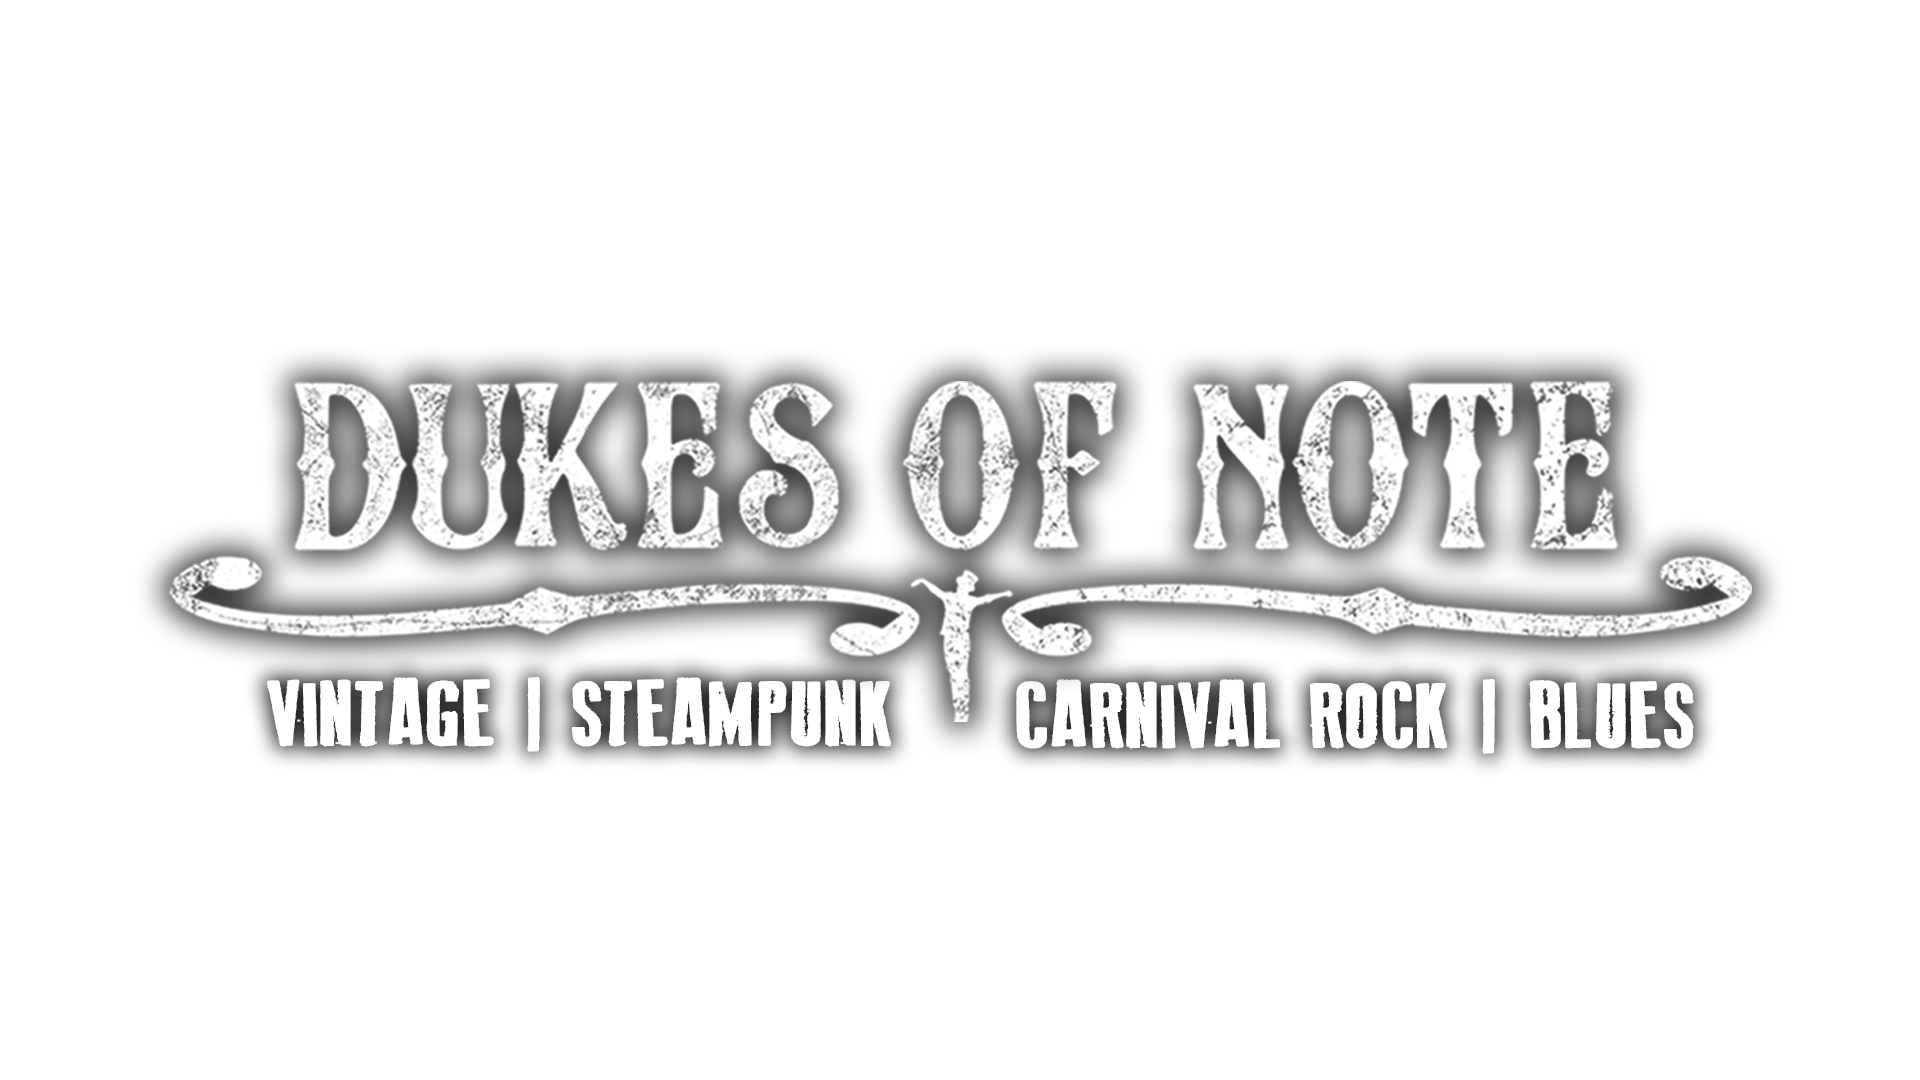 Dukes of Note